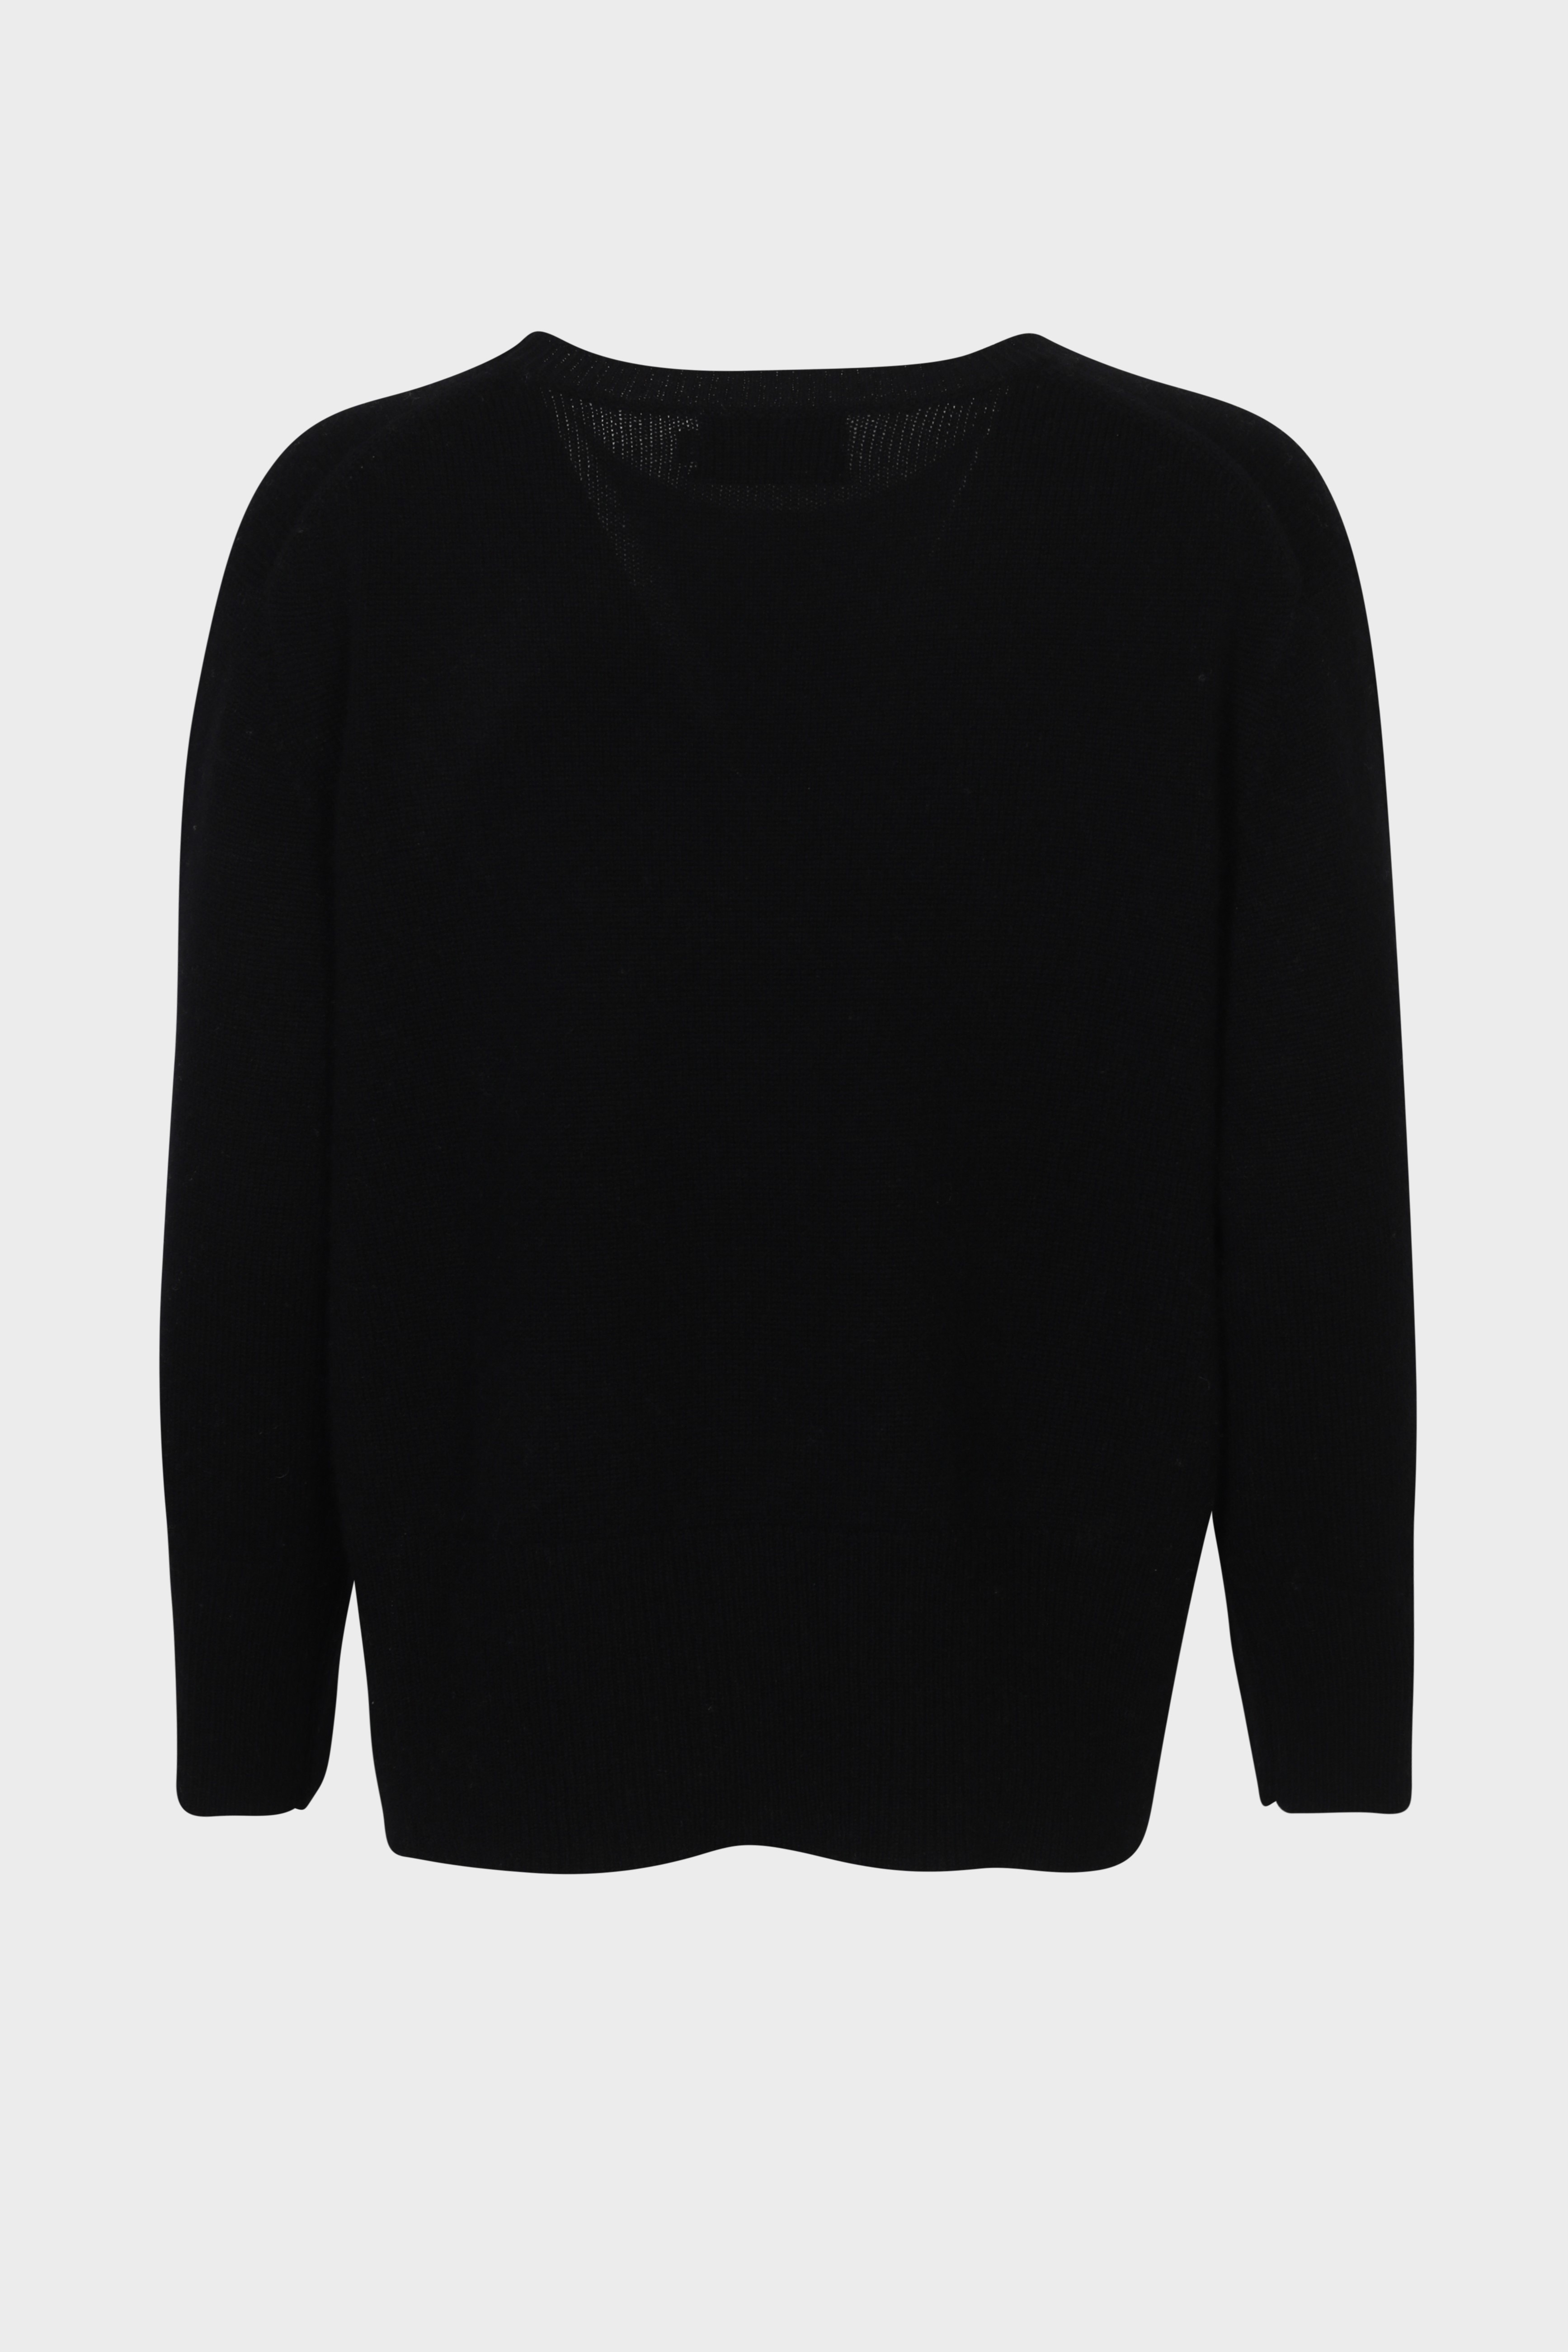 FLONA Cashmere Sweater in Black XS